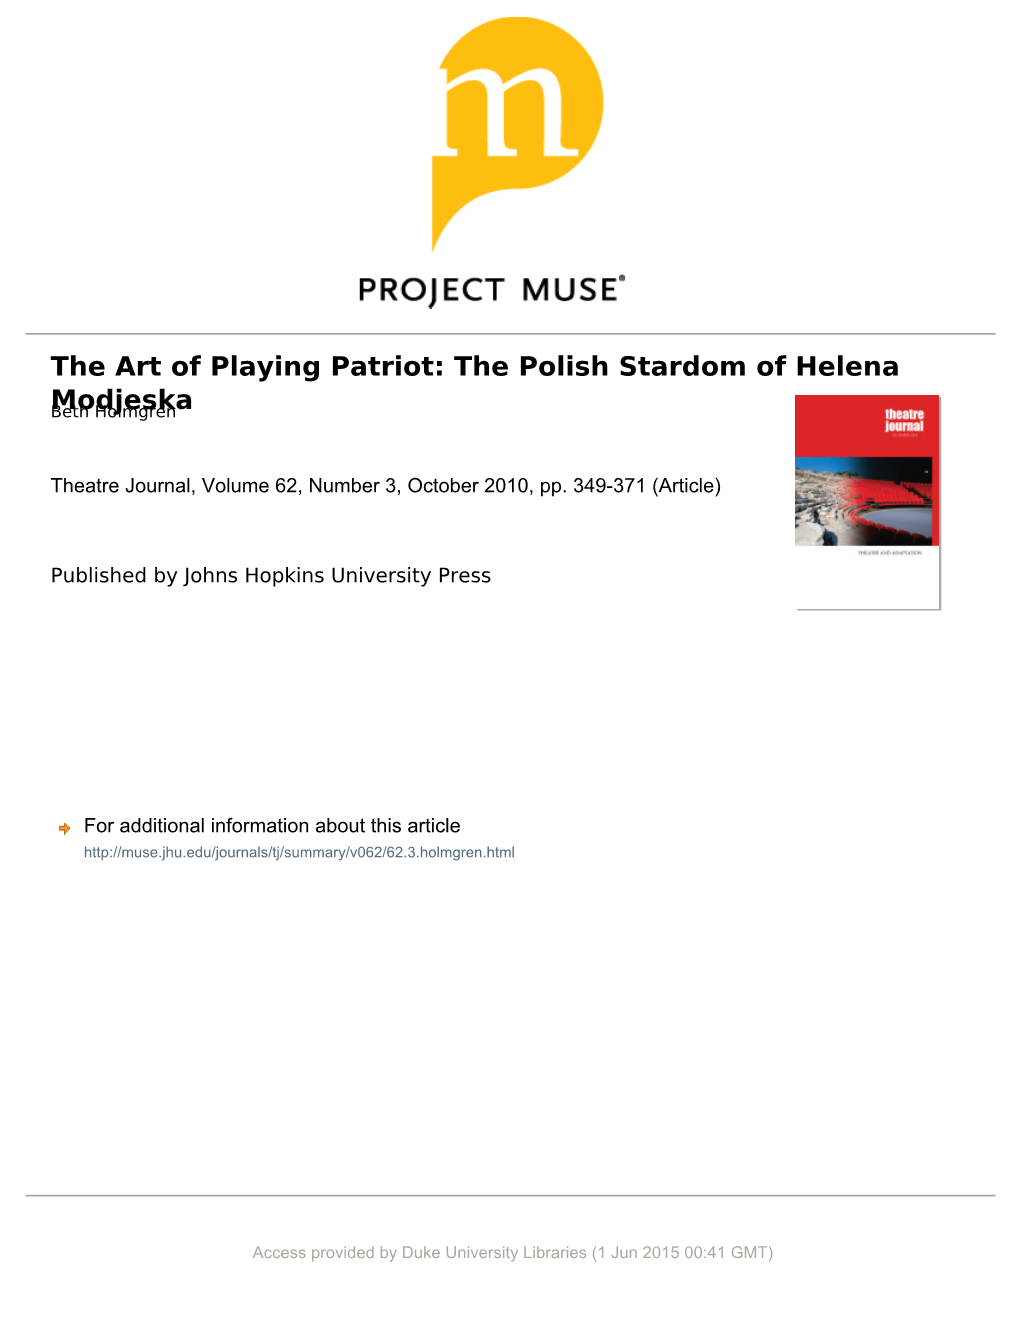 The Art of Playing Patriot: the Polish Stardom of Helena Modjeska